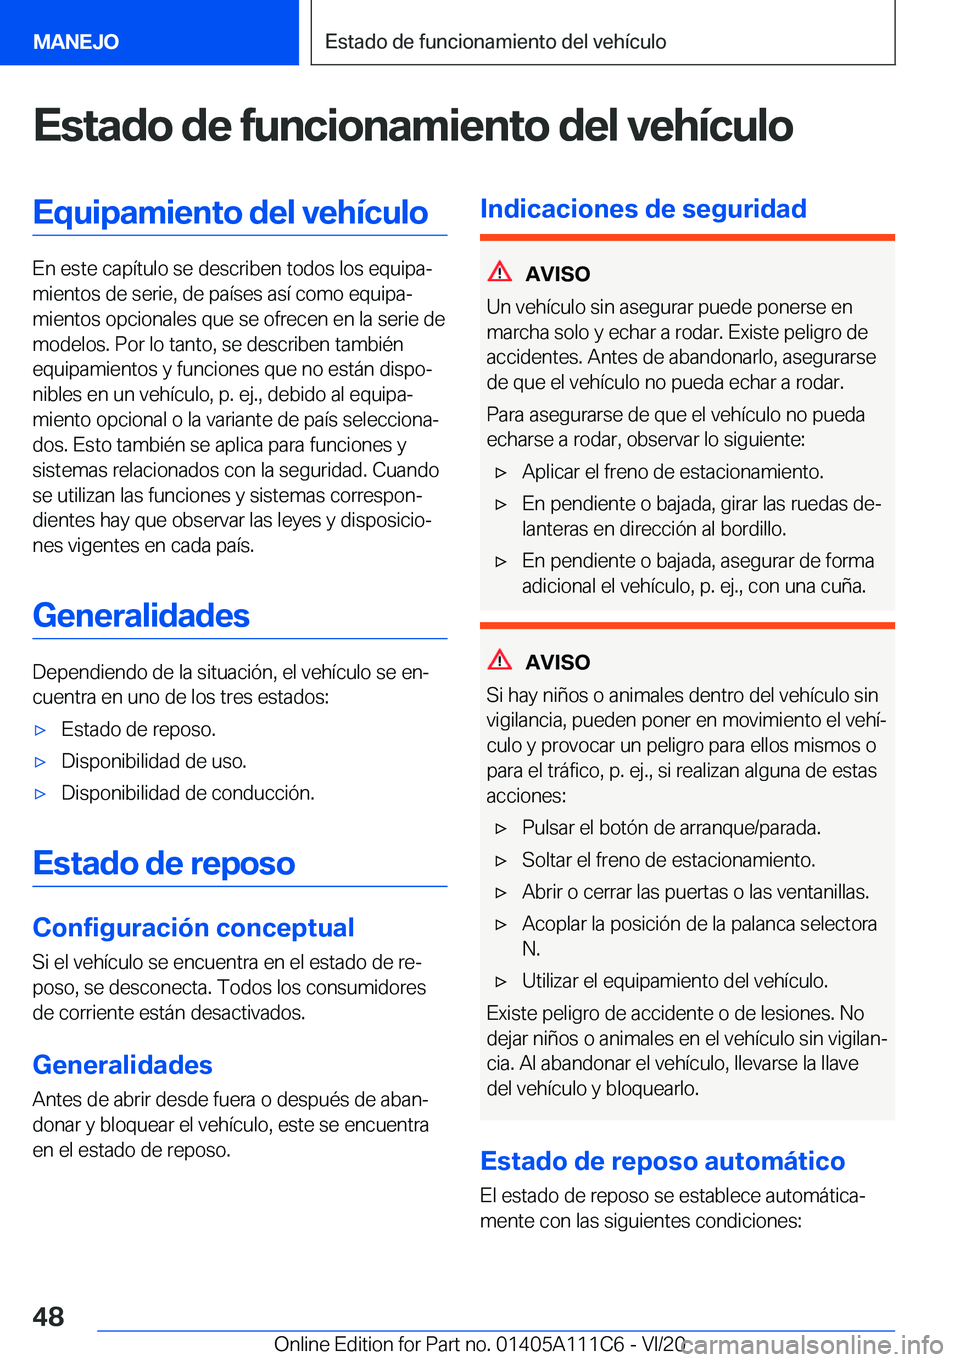 BMW 3 SERIES SEDAN PLUG-IN HYBRID 2021  Manuales de Empleo (in Spanish) �E�s�t�a�d�o��d�e��f�u�n�c�i�o�n�a�m�i�e�n�t�o��d�e�l��v�e�h�